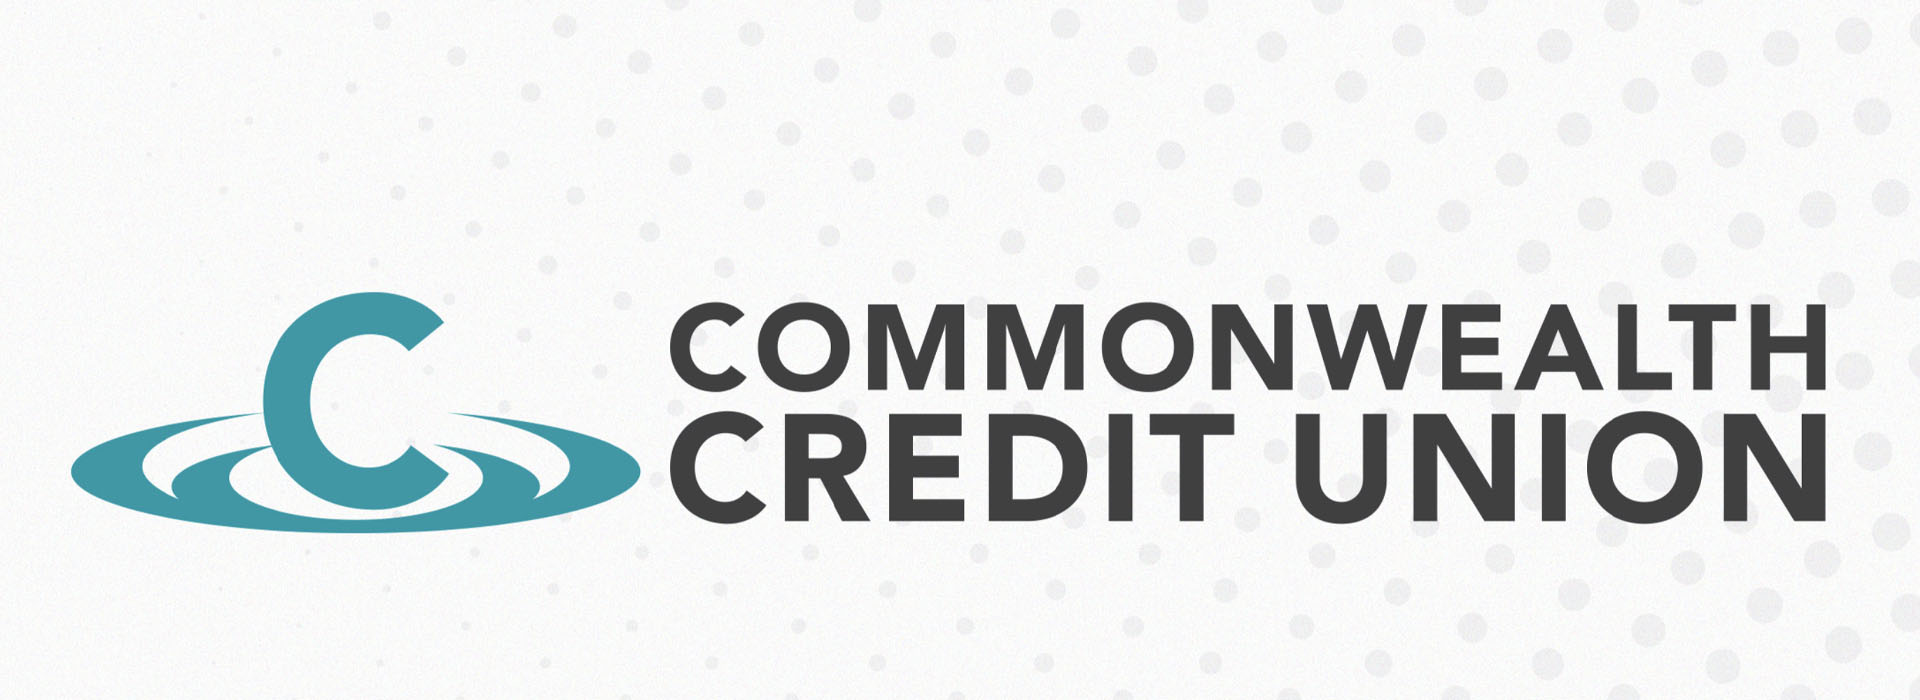 Commonwealth Credit Union Branding